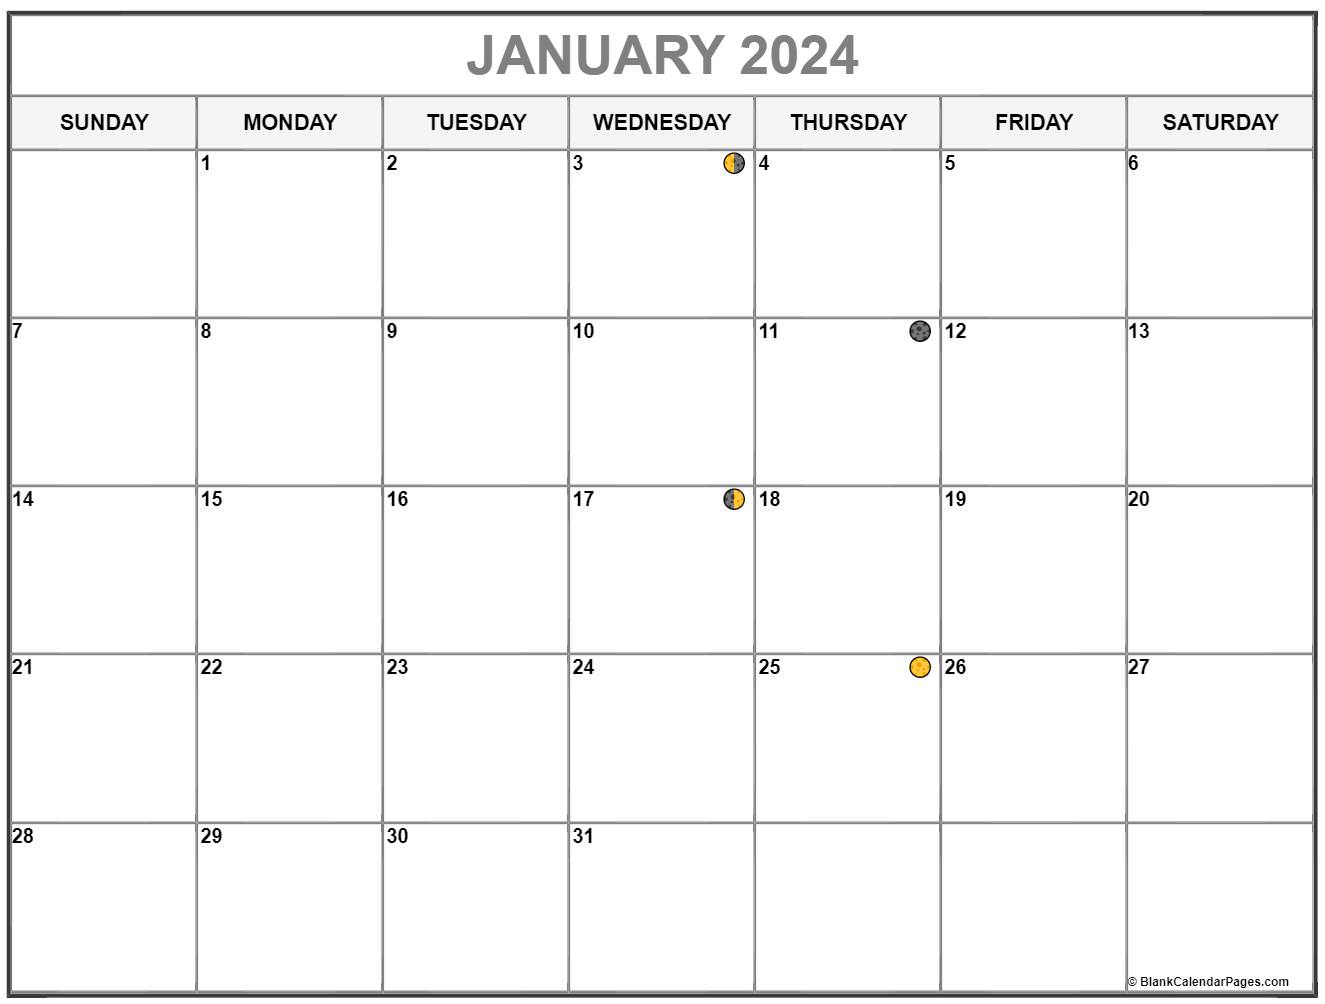 free printable moon phase calendar 2021 January 2021 Lunar Calendar Moon Phase Calendar free printable moon phase calendar 2021